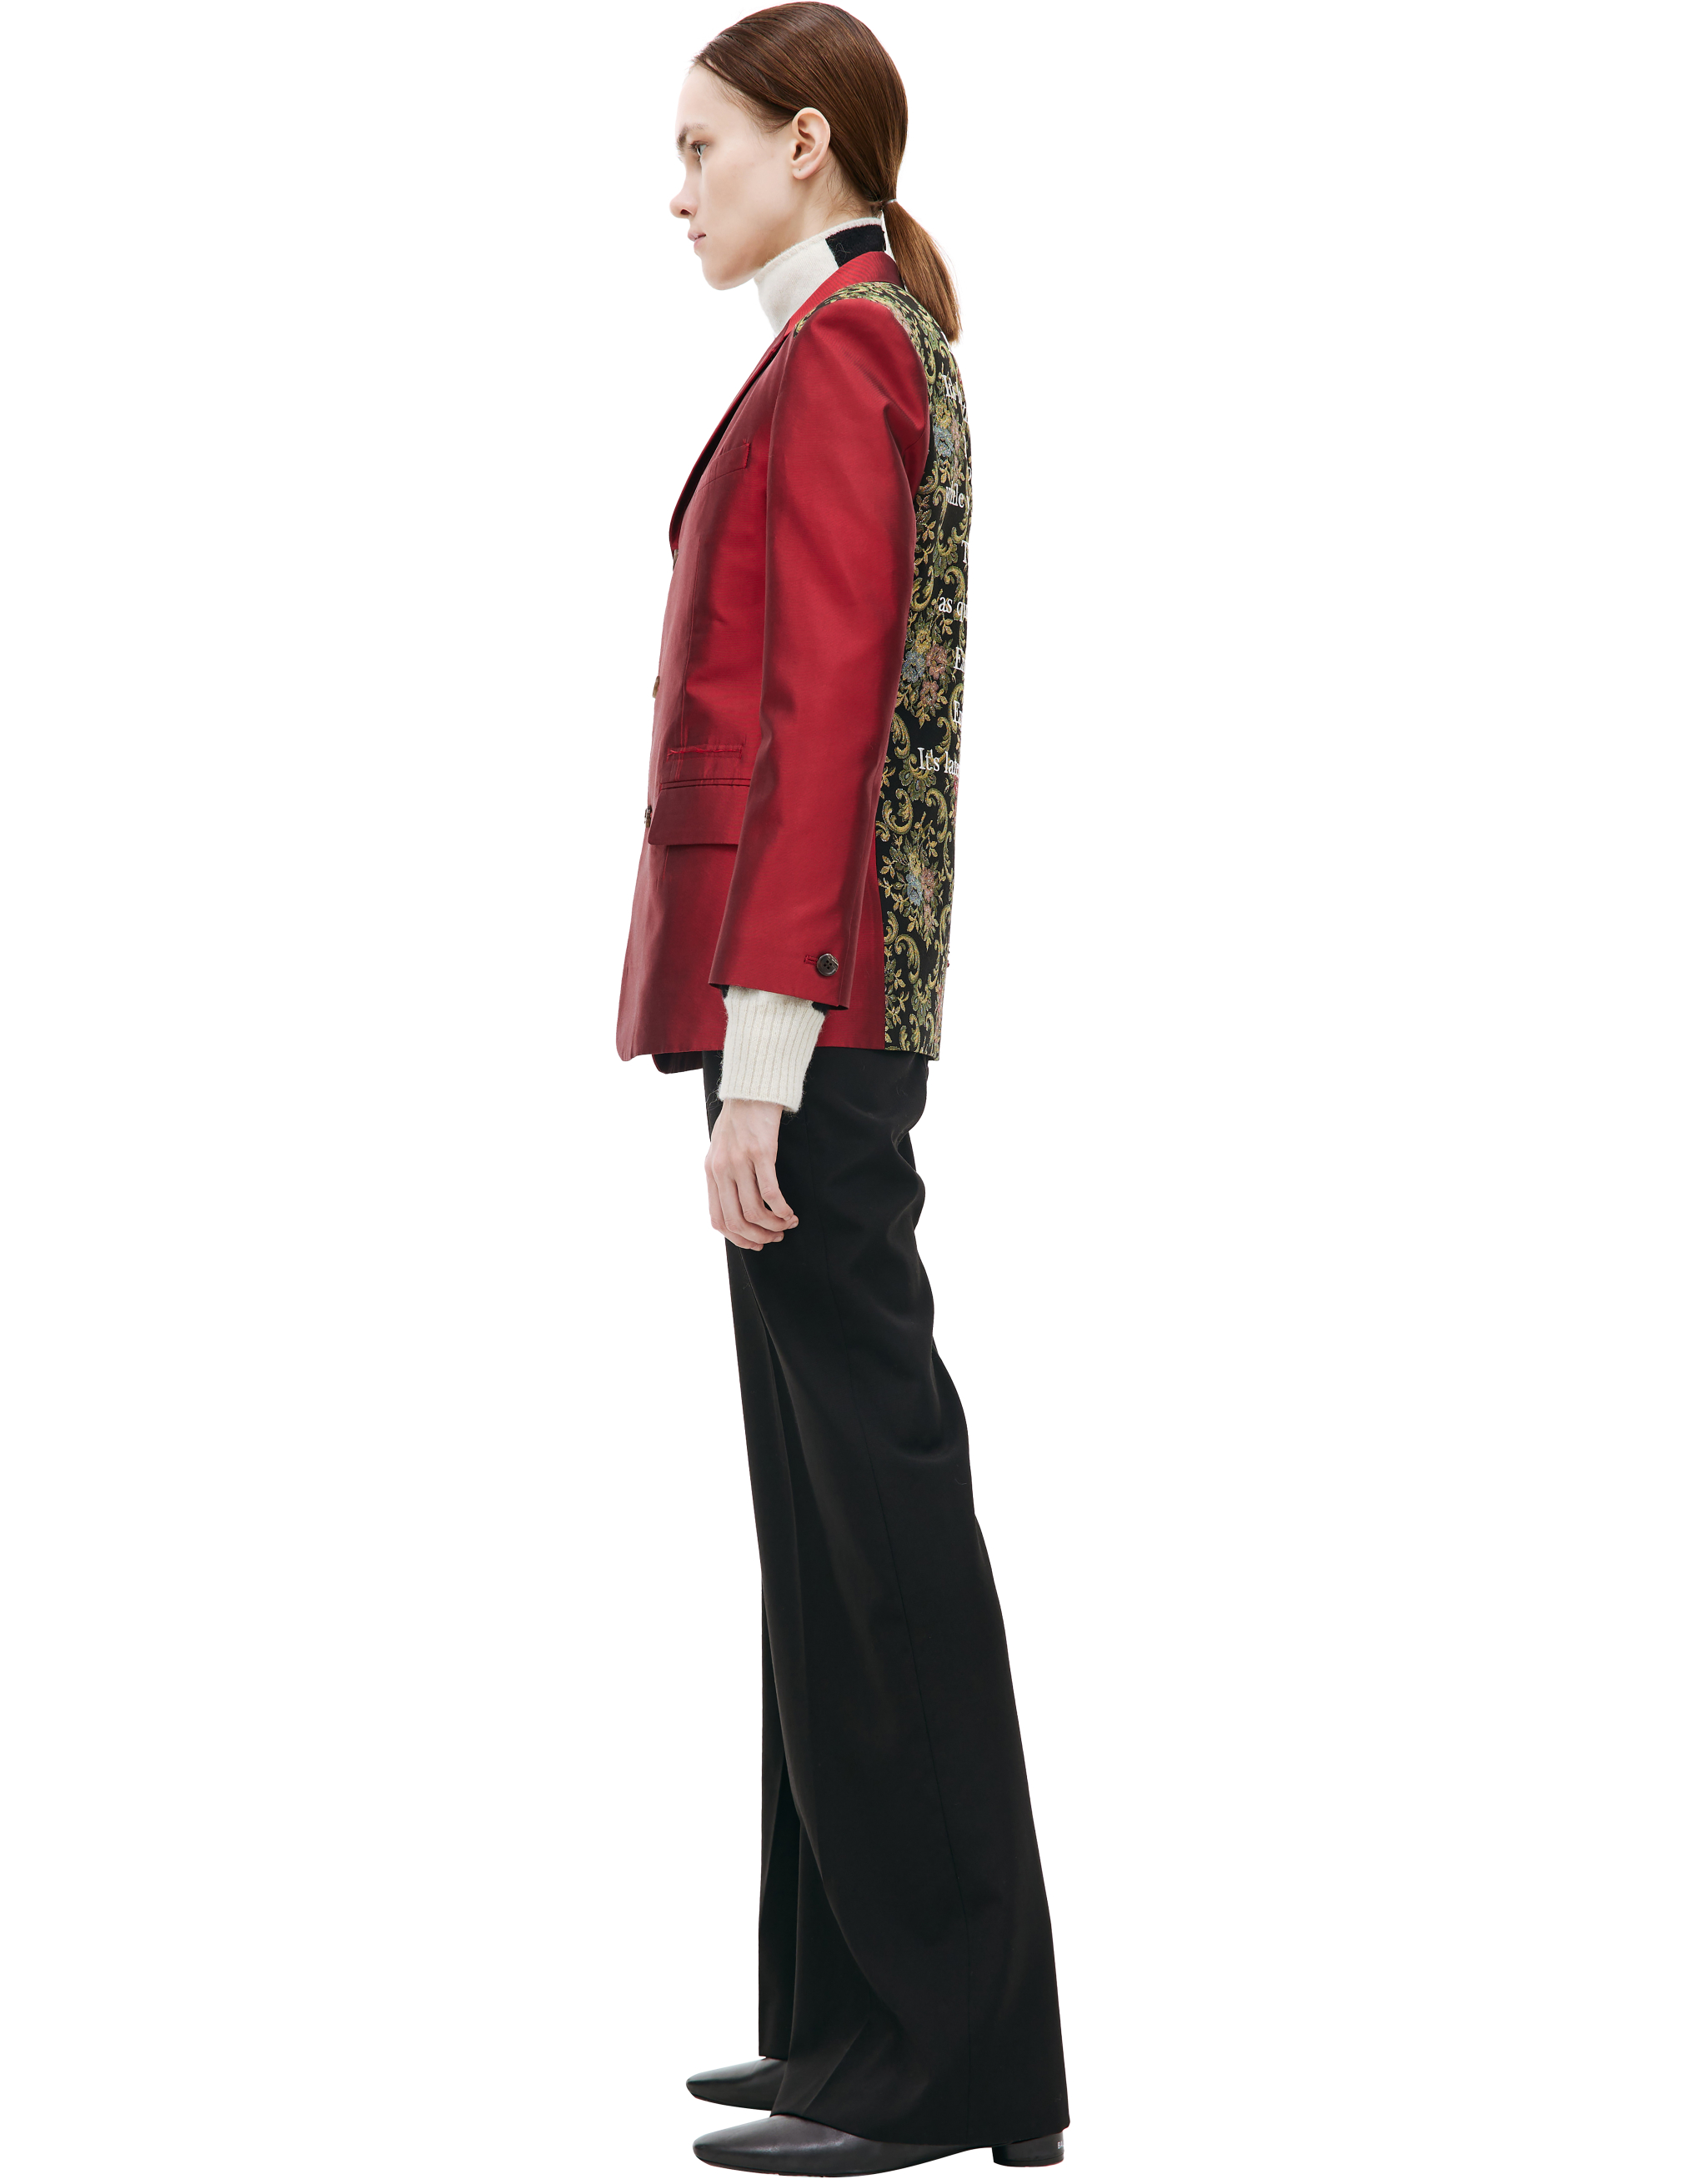 Жакет с вышивкой гобелен Undercover UC2C1101-2, размер 3 - фото 2